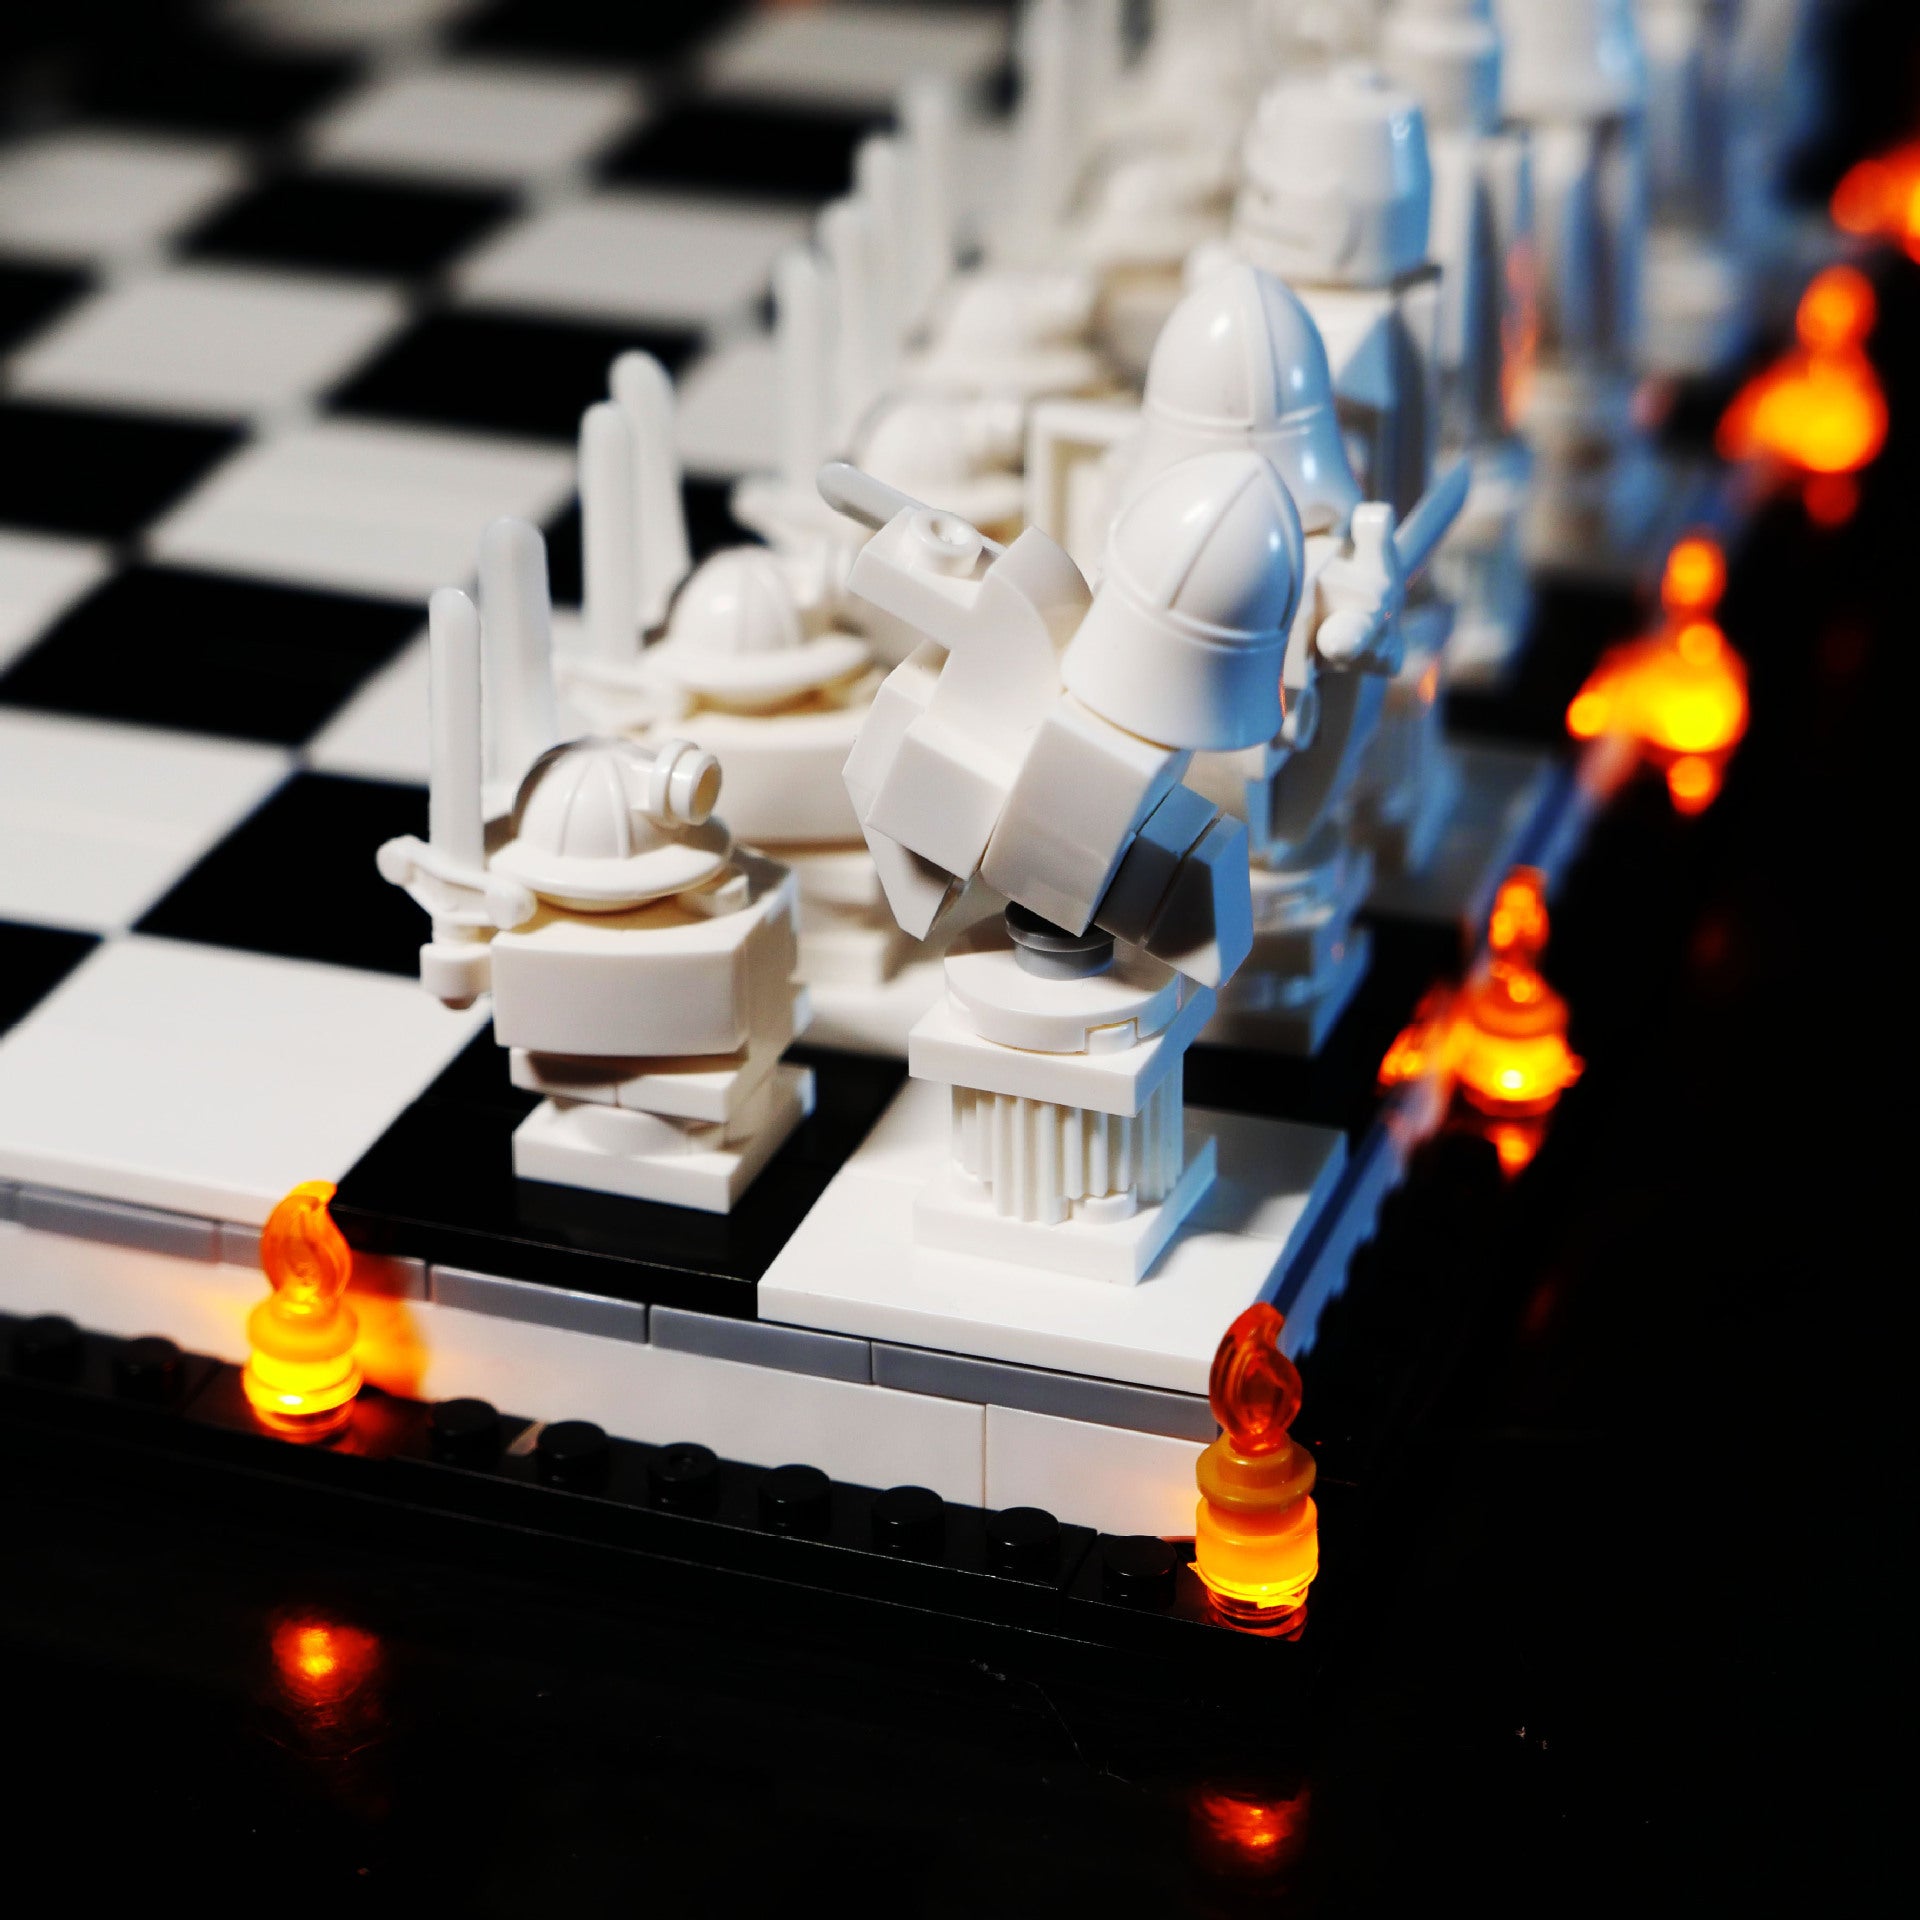 Illuminated Chess Set with Learning Functionality